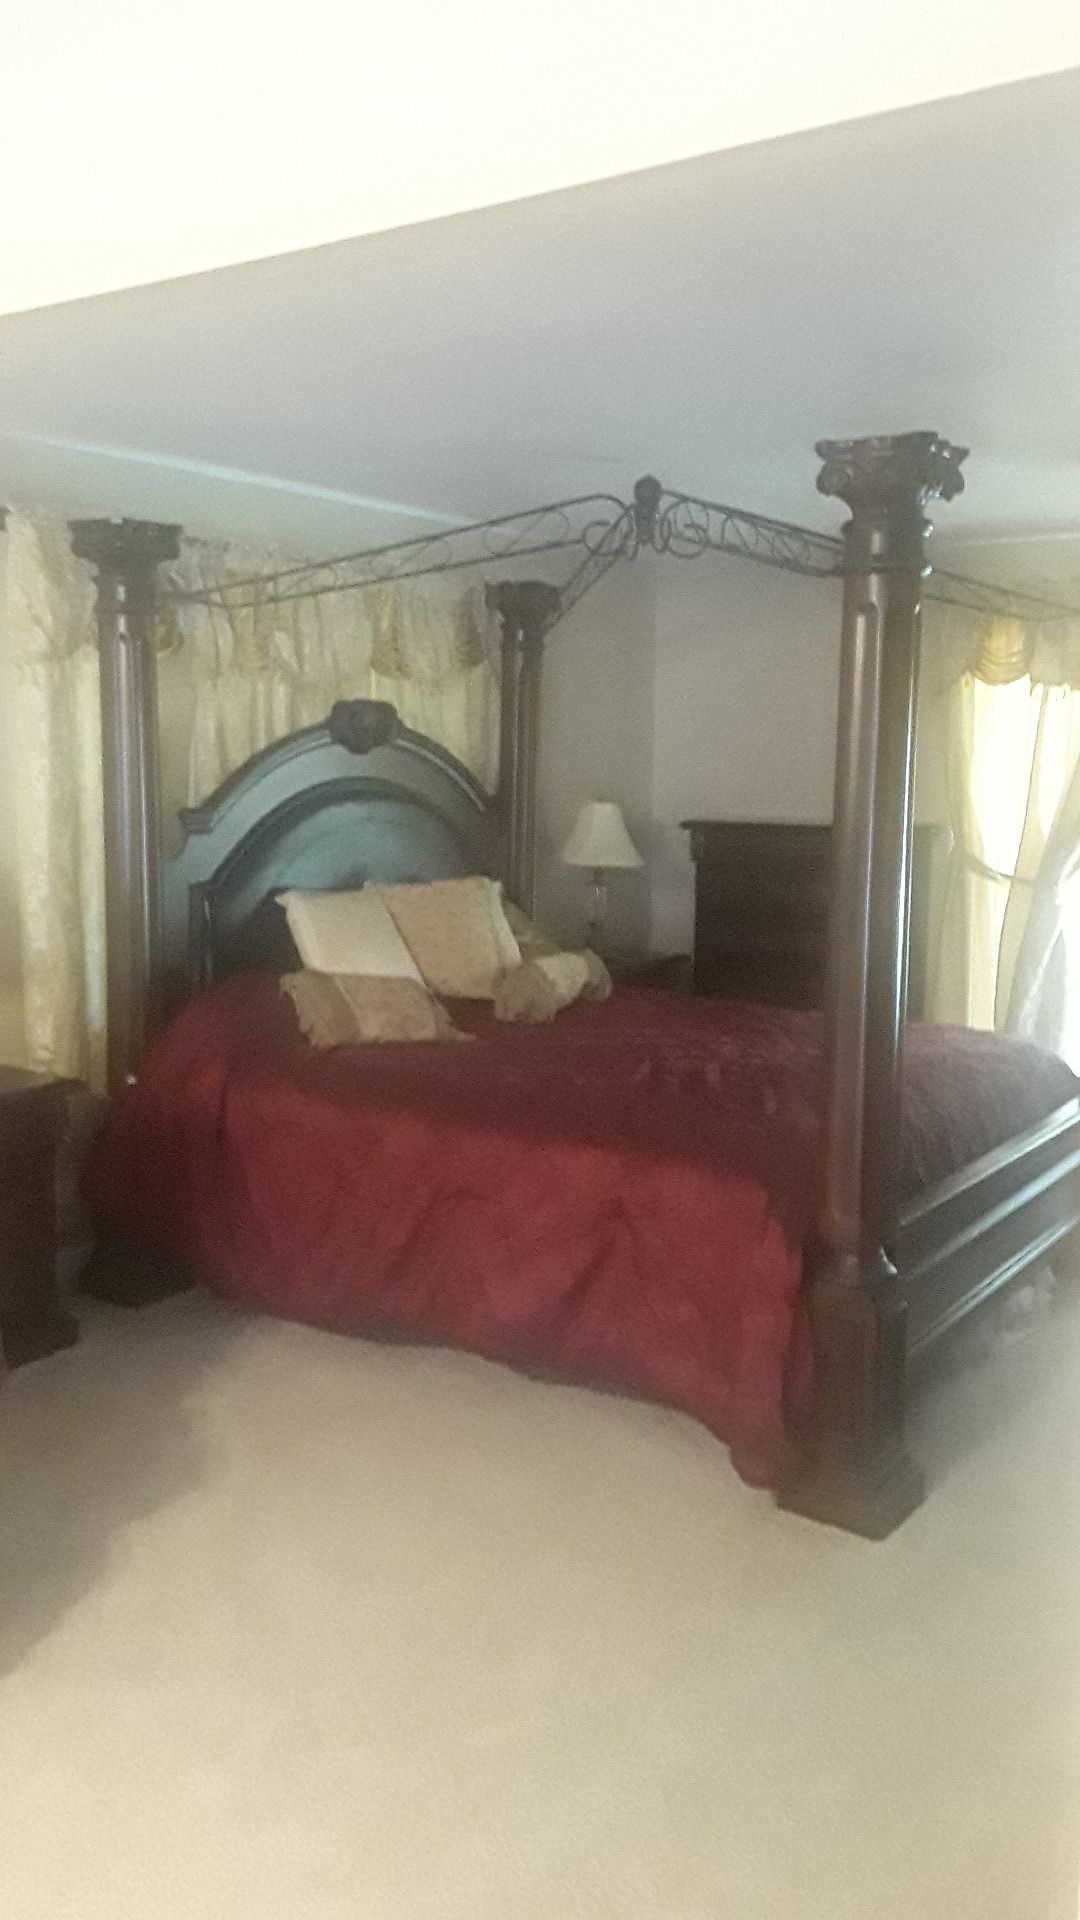 King bedroom and mattress set